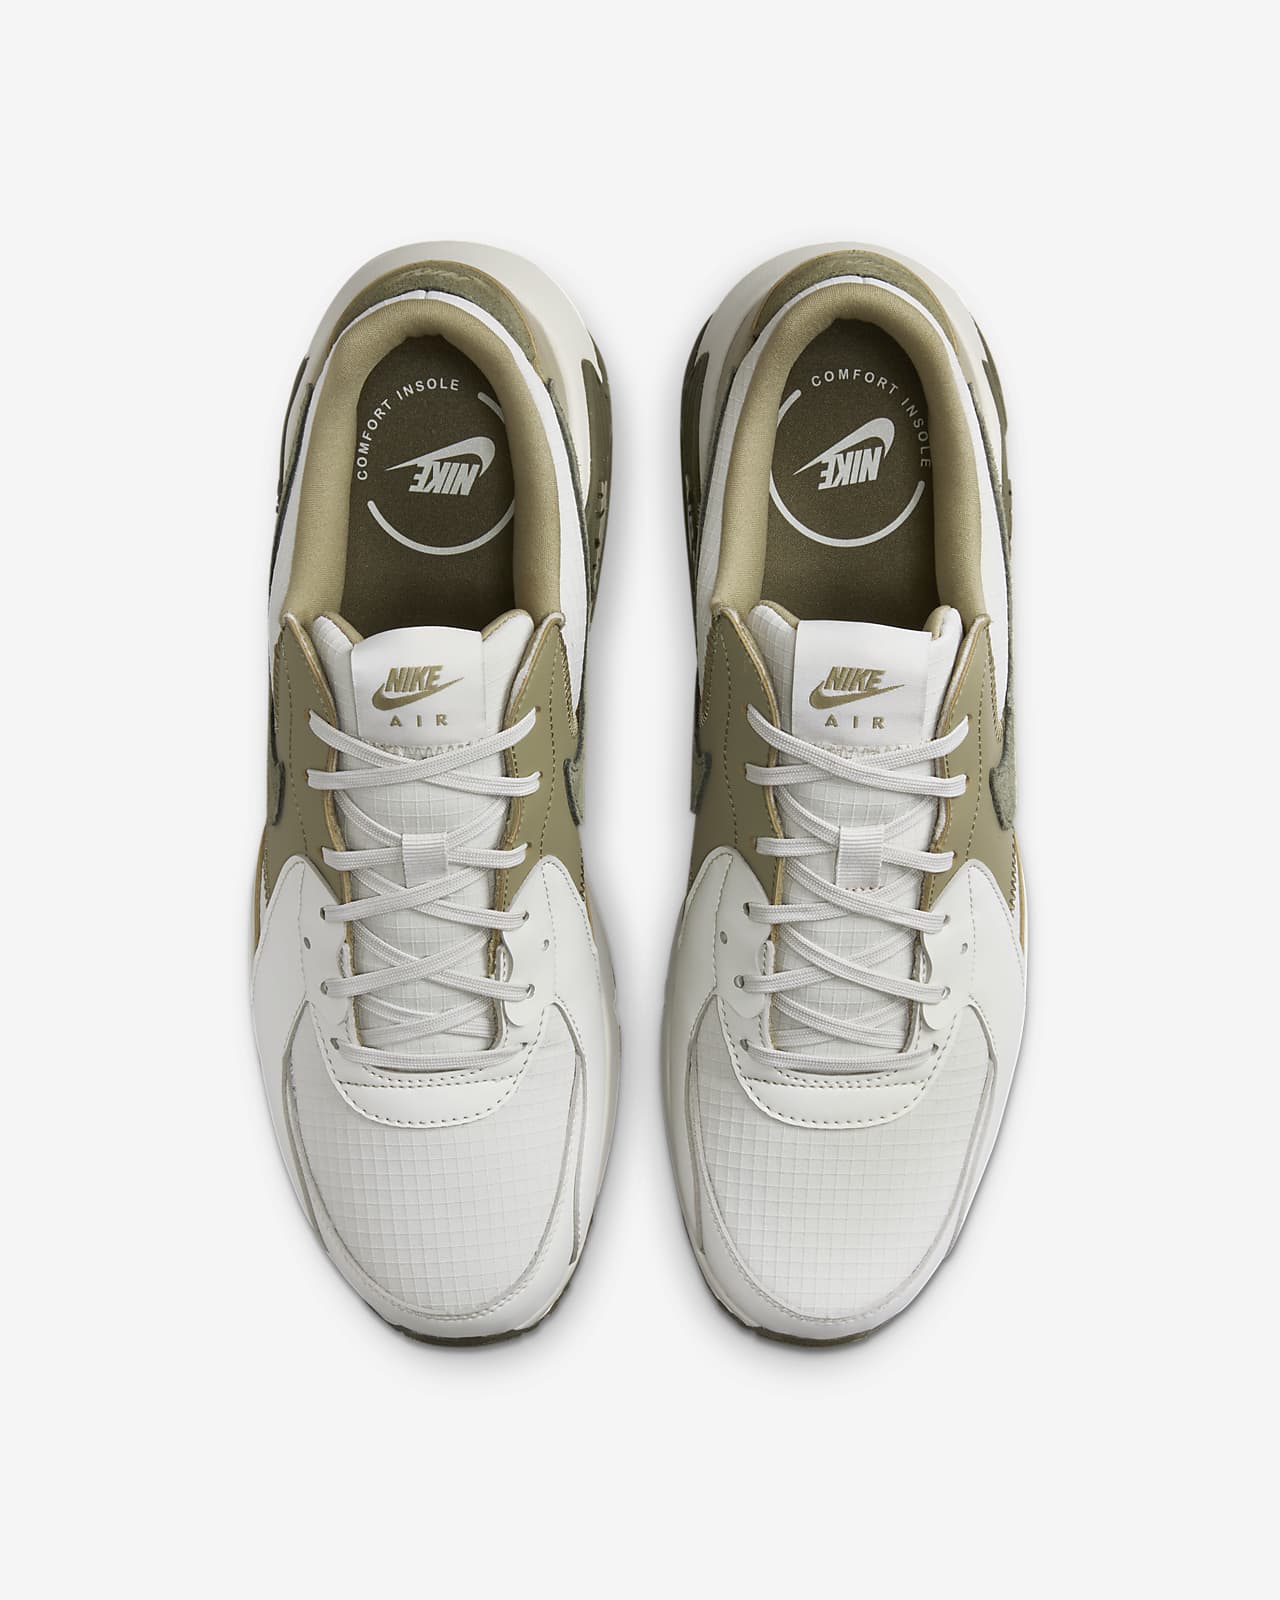 Men's shoes Nike Air Max 90 Phantom/ Neutral Olive-Light Bone